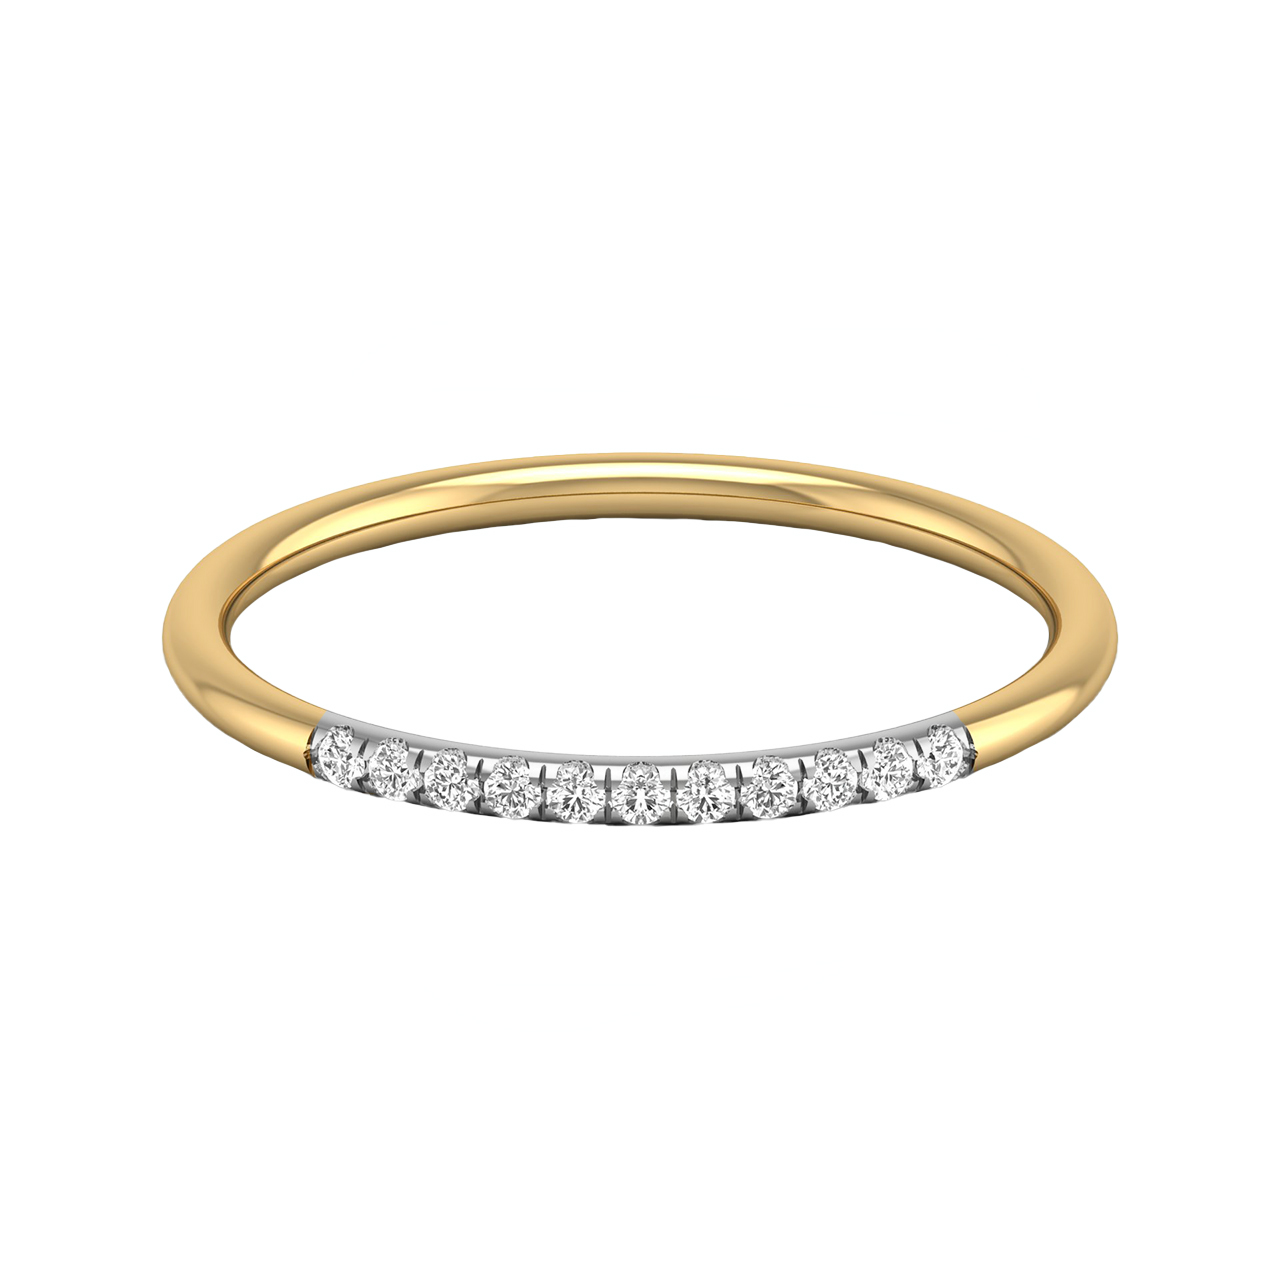 Rectilinear Design Diamond Ring